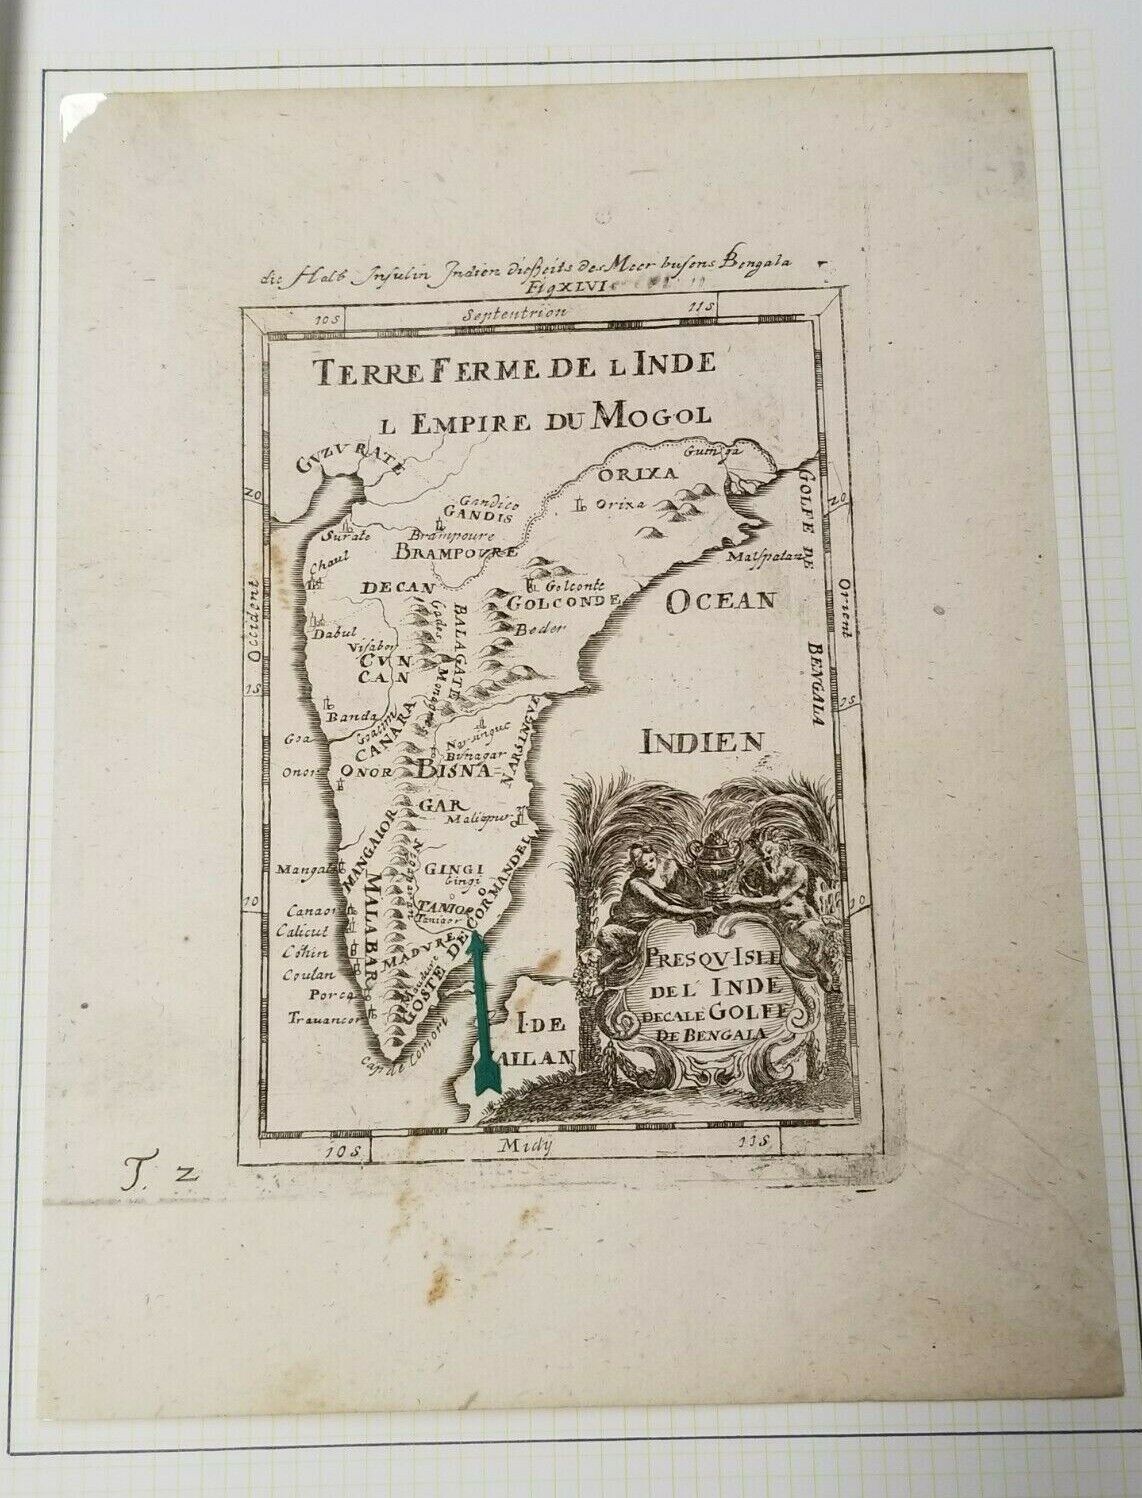  Antique Map Prequ Isle De L'Inde Decale Golfe De Bengala